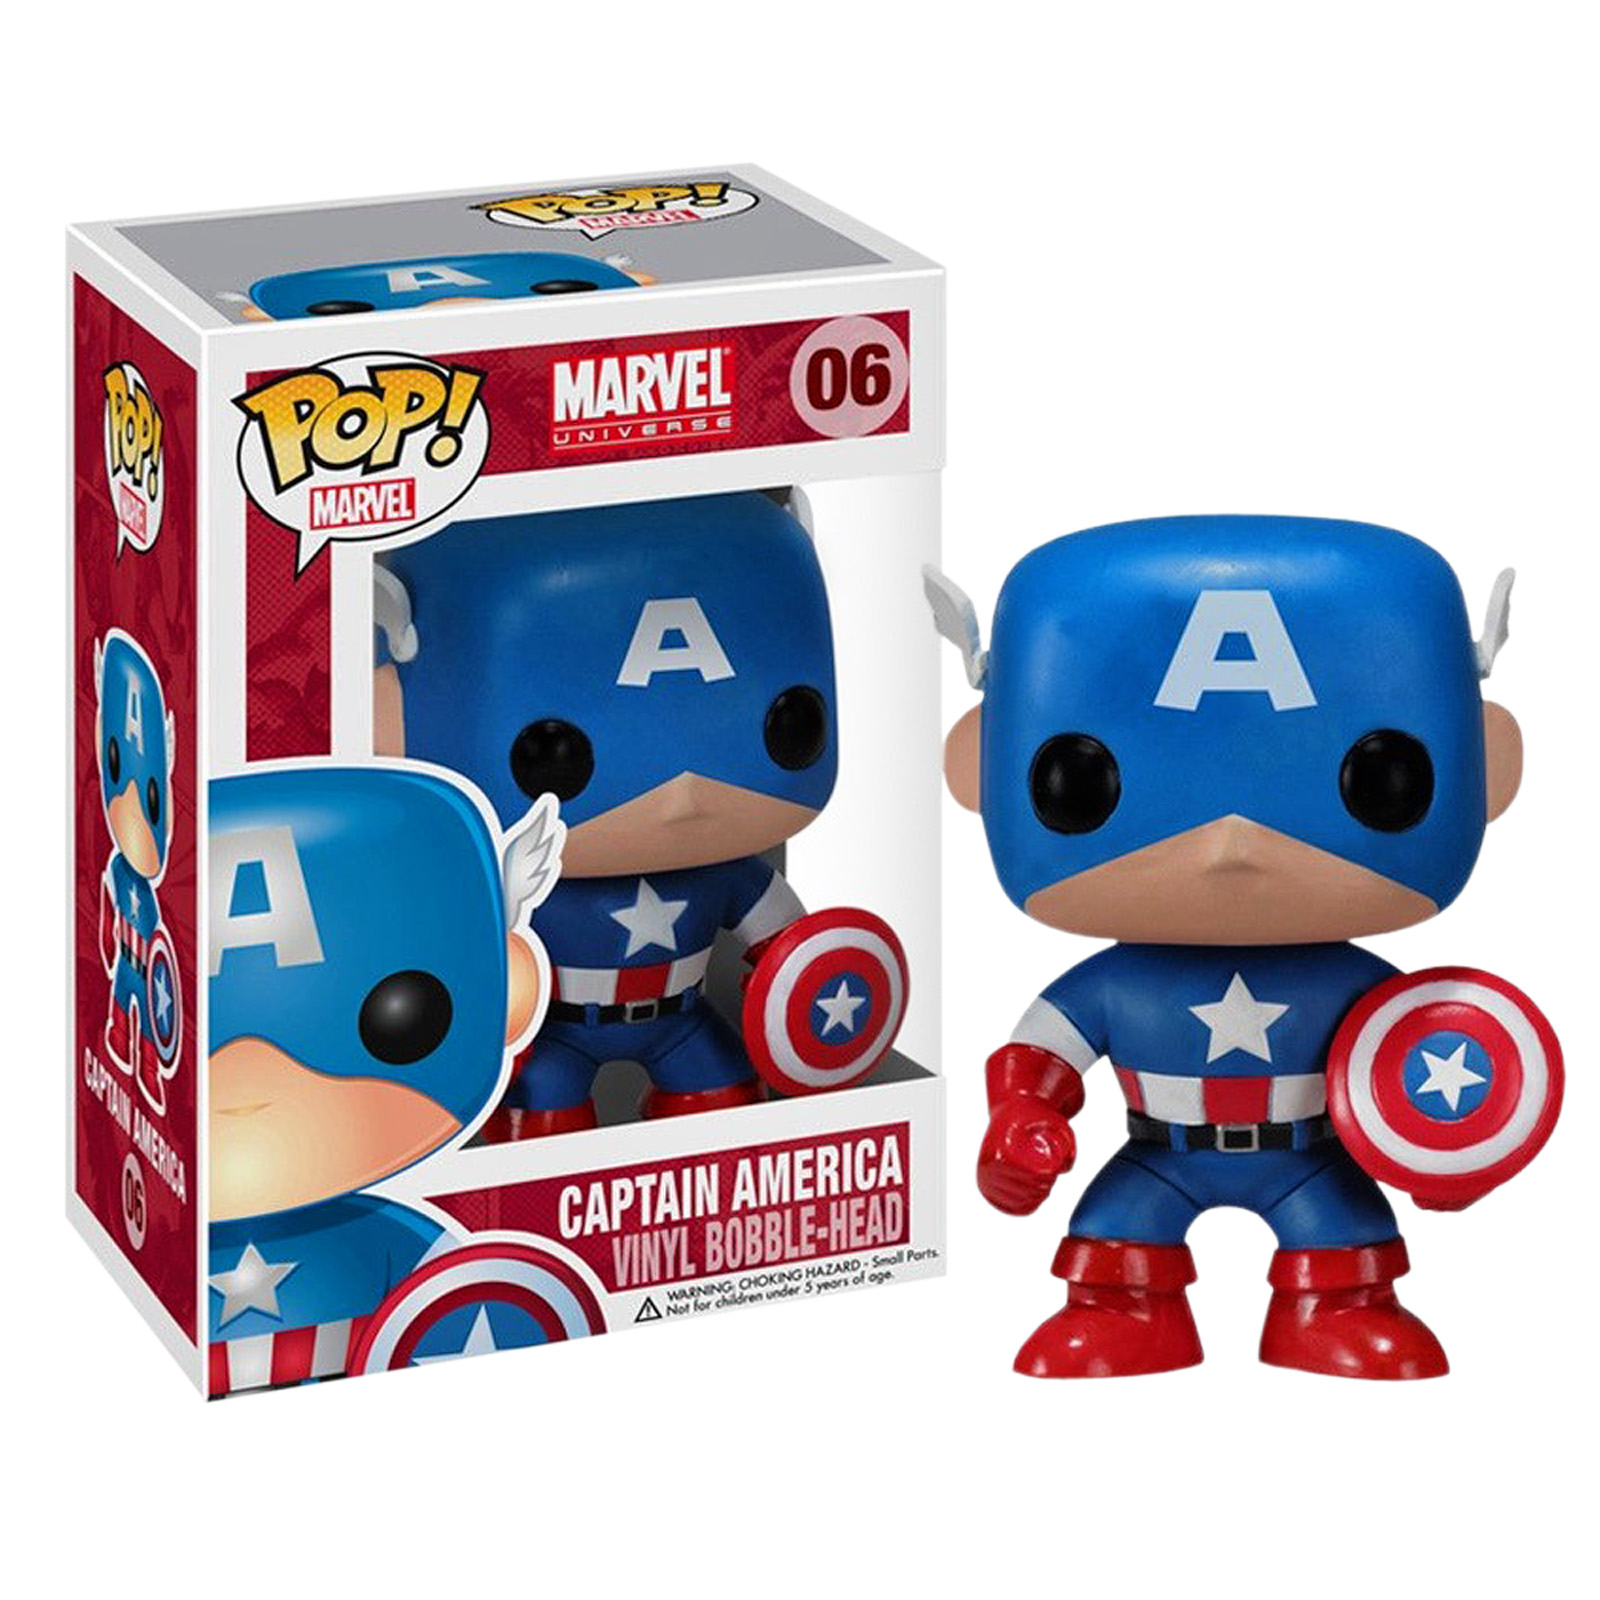 Captain America - Marvel Bobblehead Figure